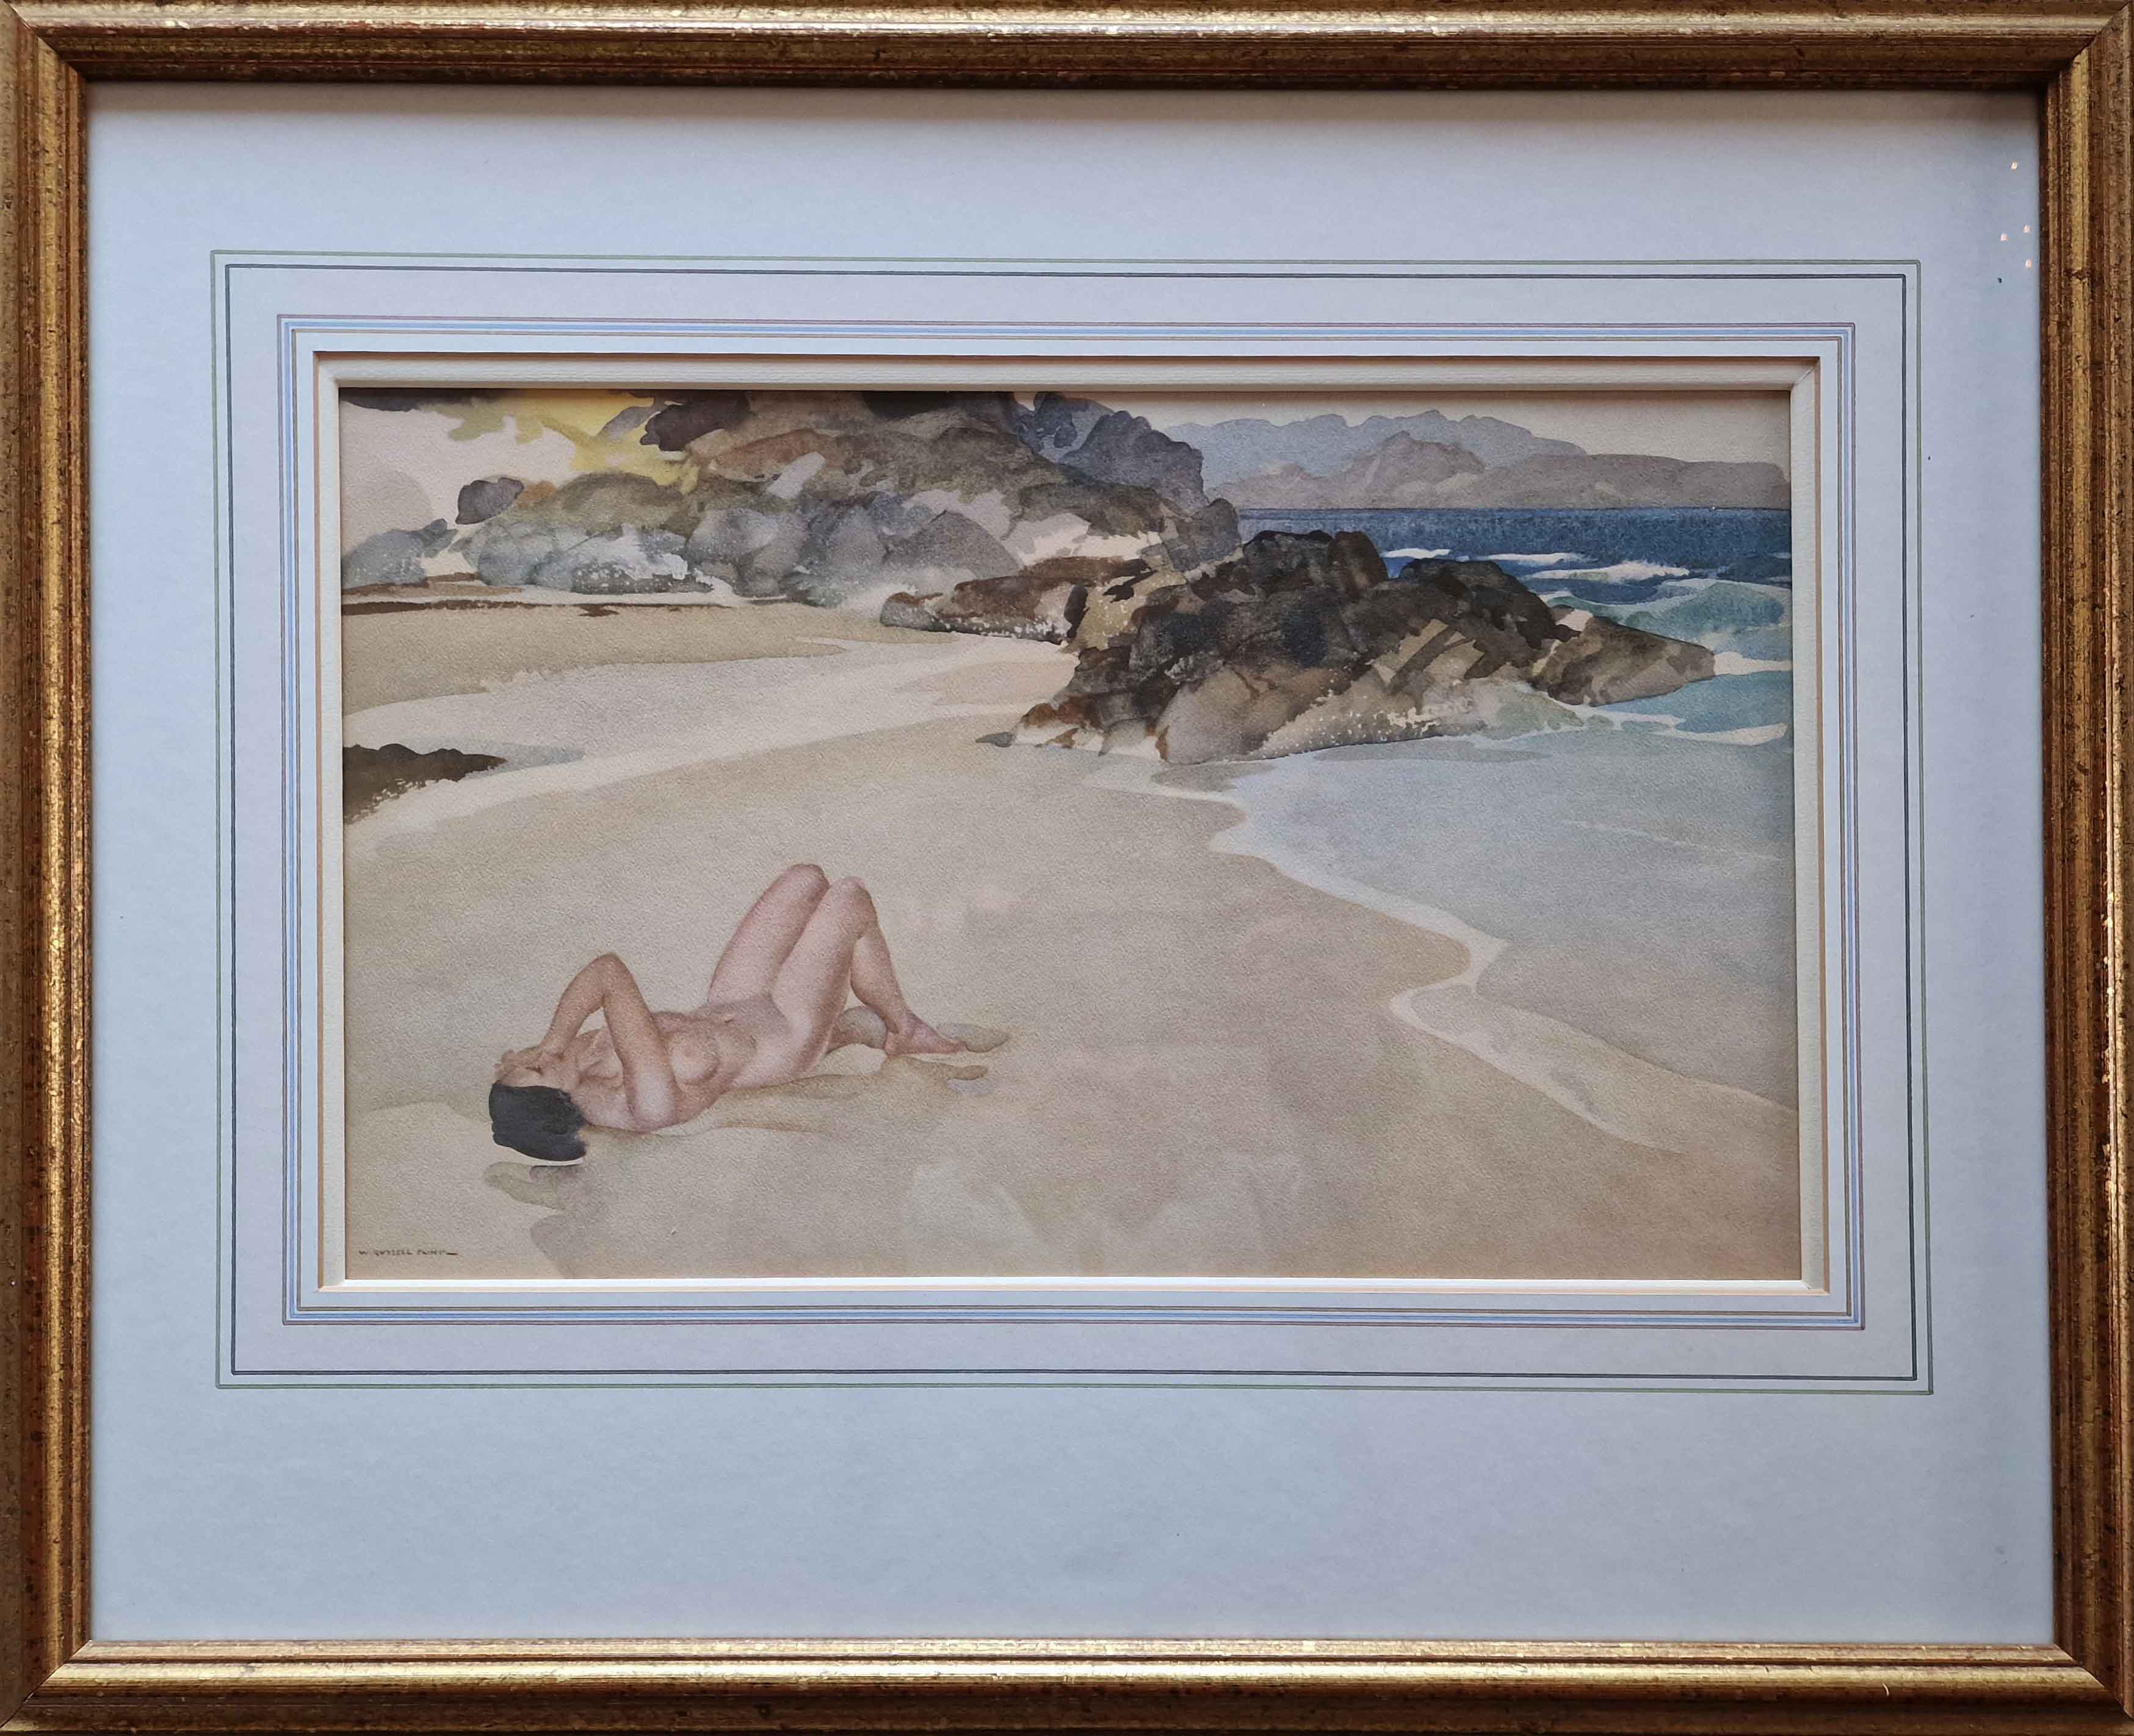 russell flint Nude on a beach print